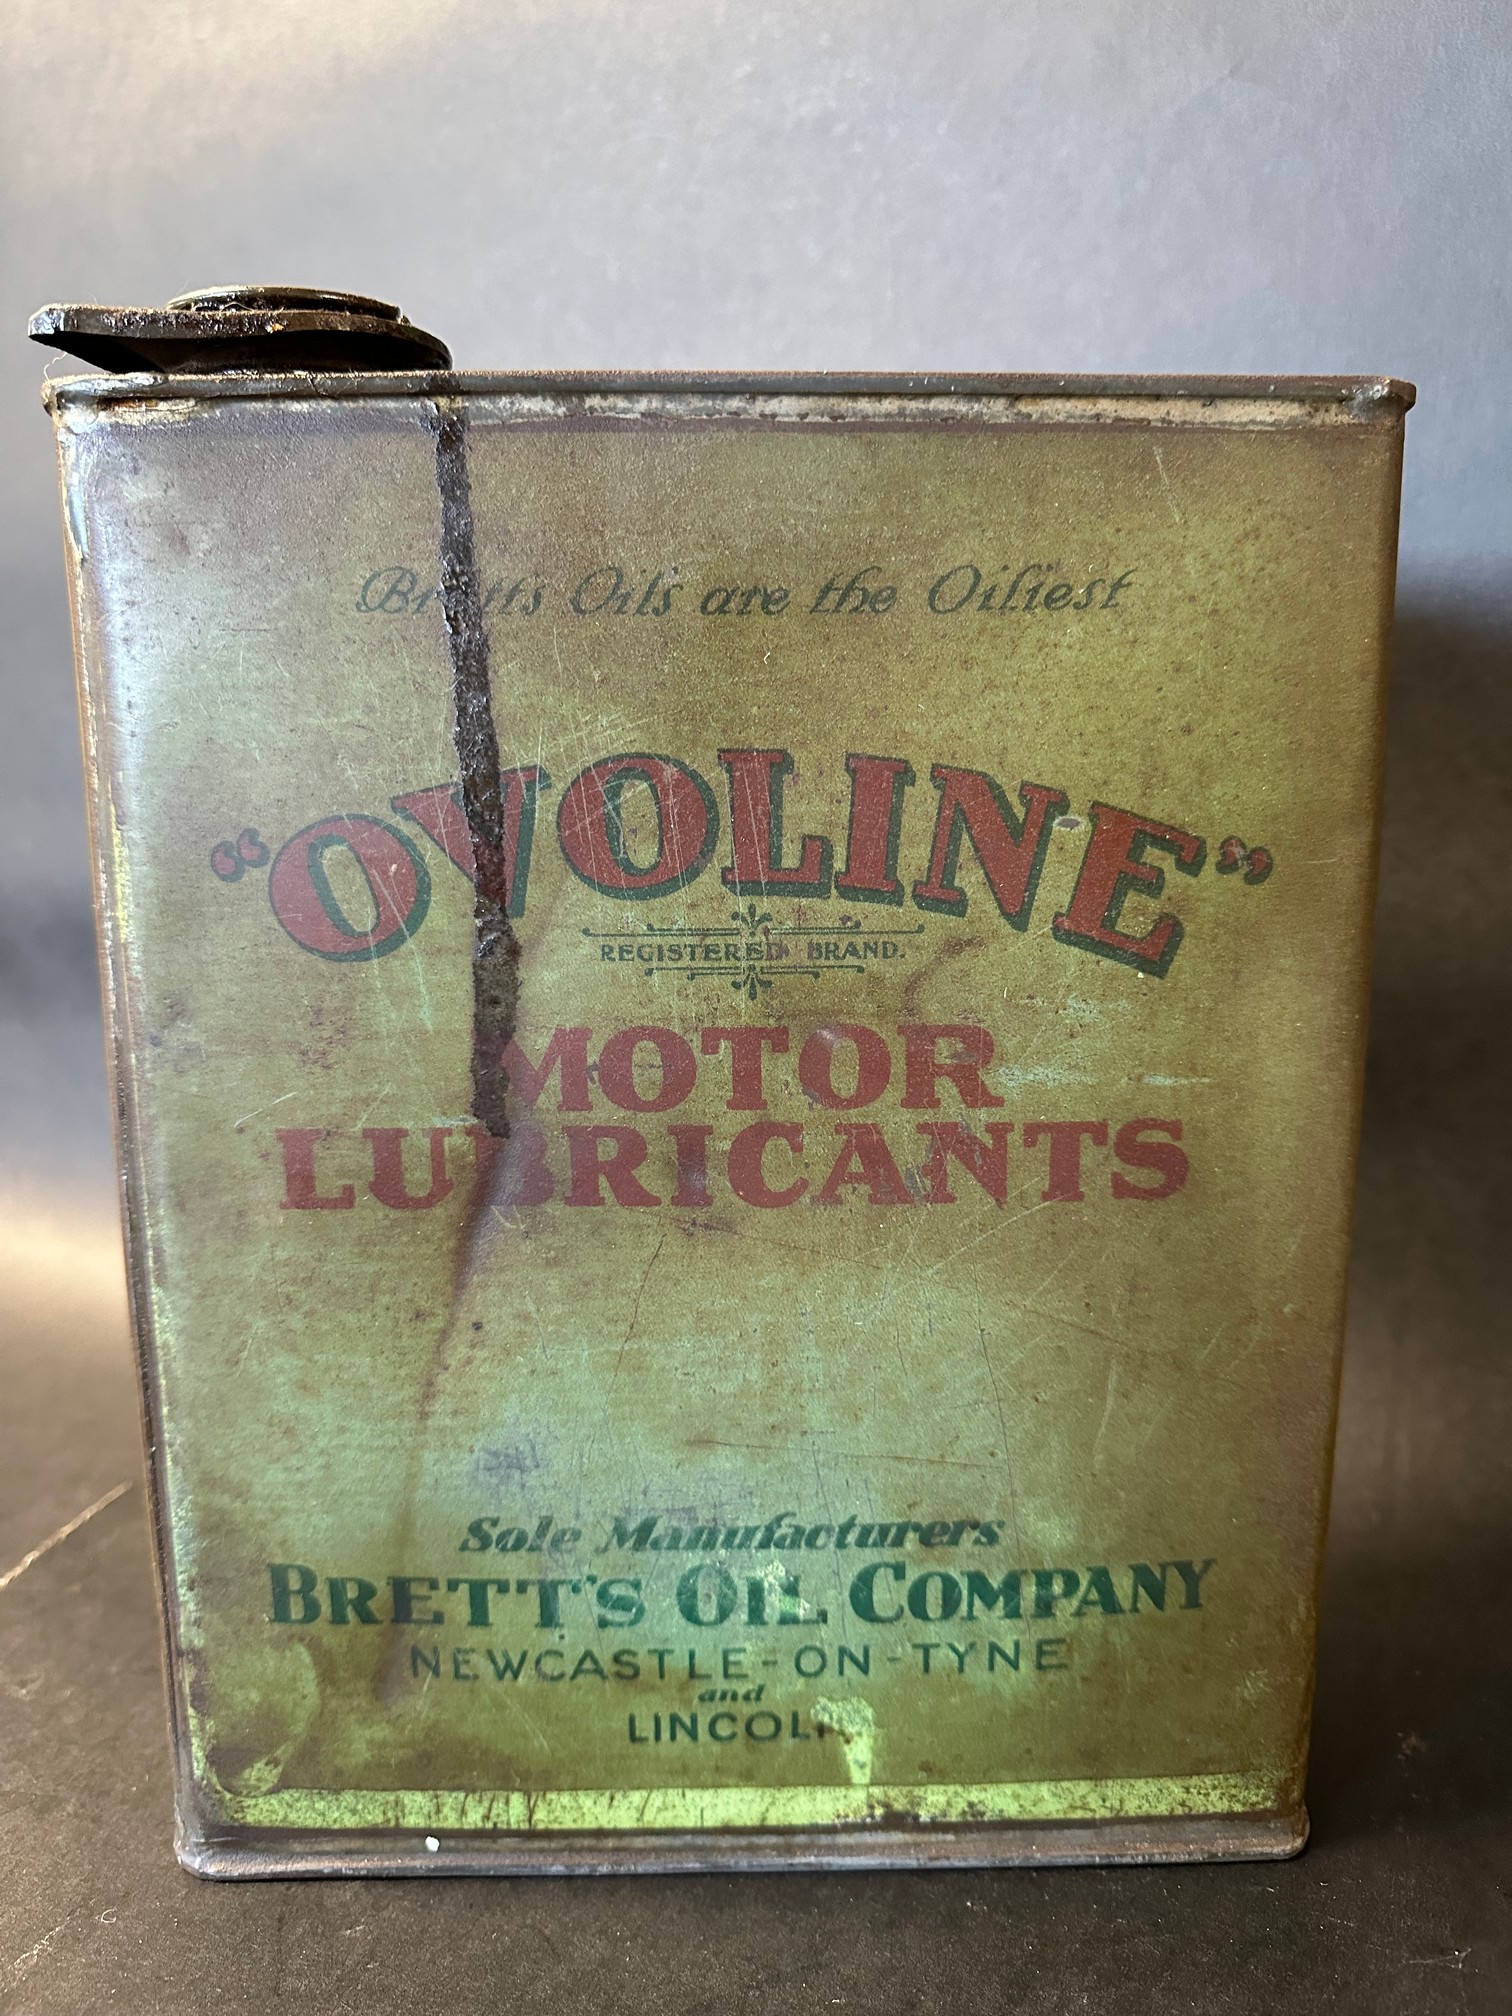 A rare Ovoline Motor Lubricants gallon can.